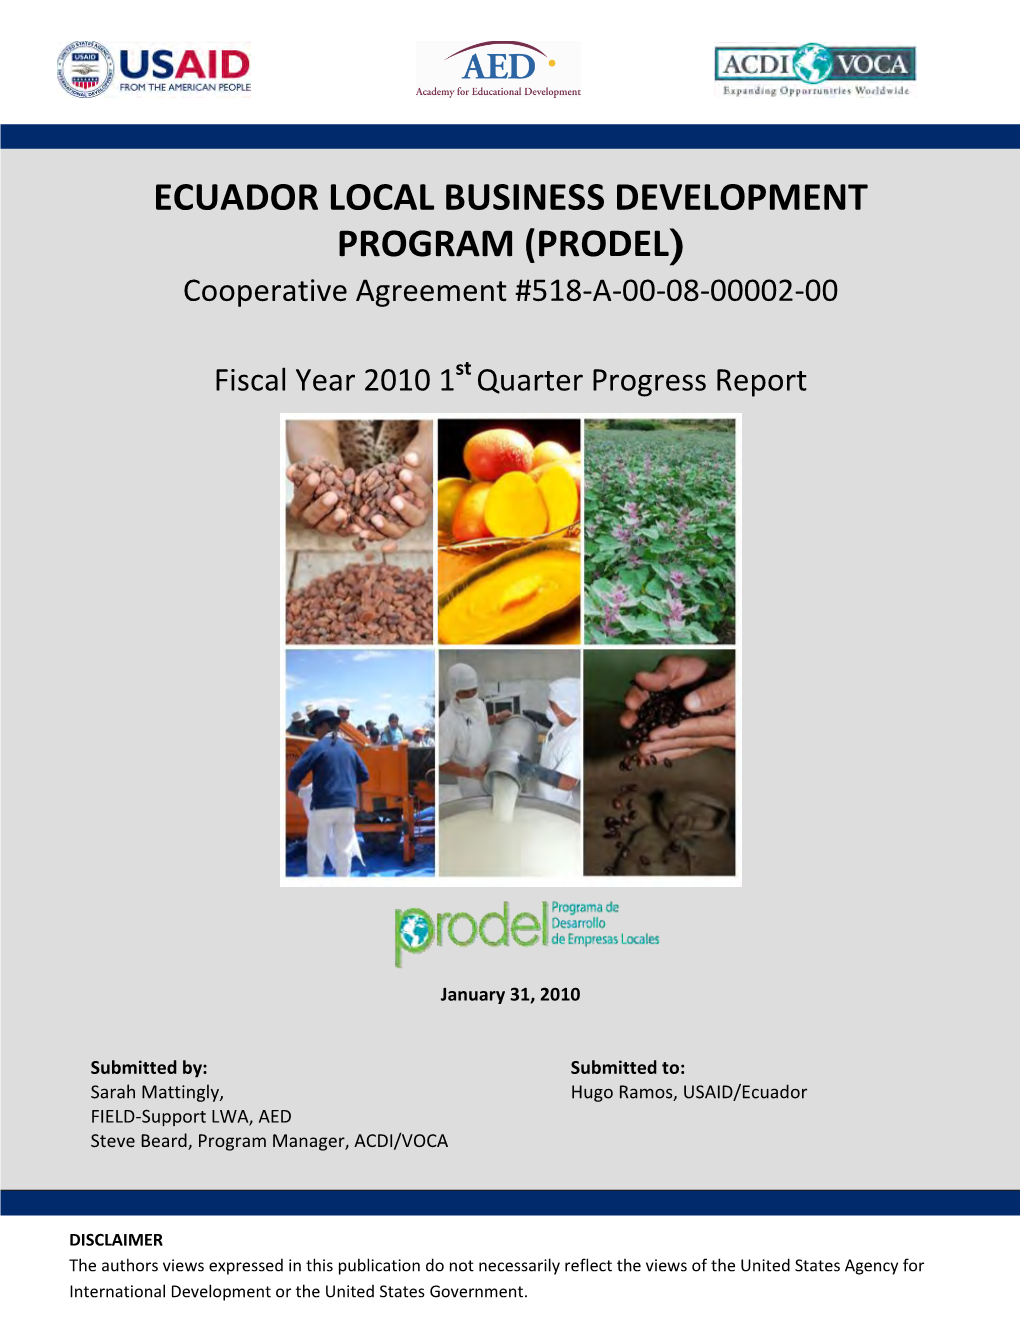 ECUADOR LOCAL BUSINESS DEVELOPMENT PROGRAM (PRODEL) Cooperative Agreement #518-A-00-08-00002-00